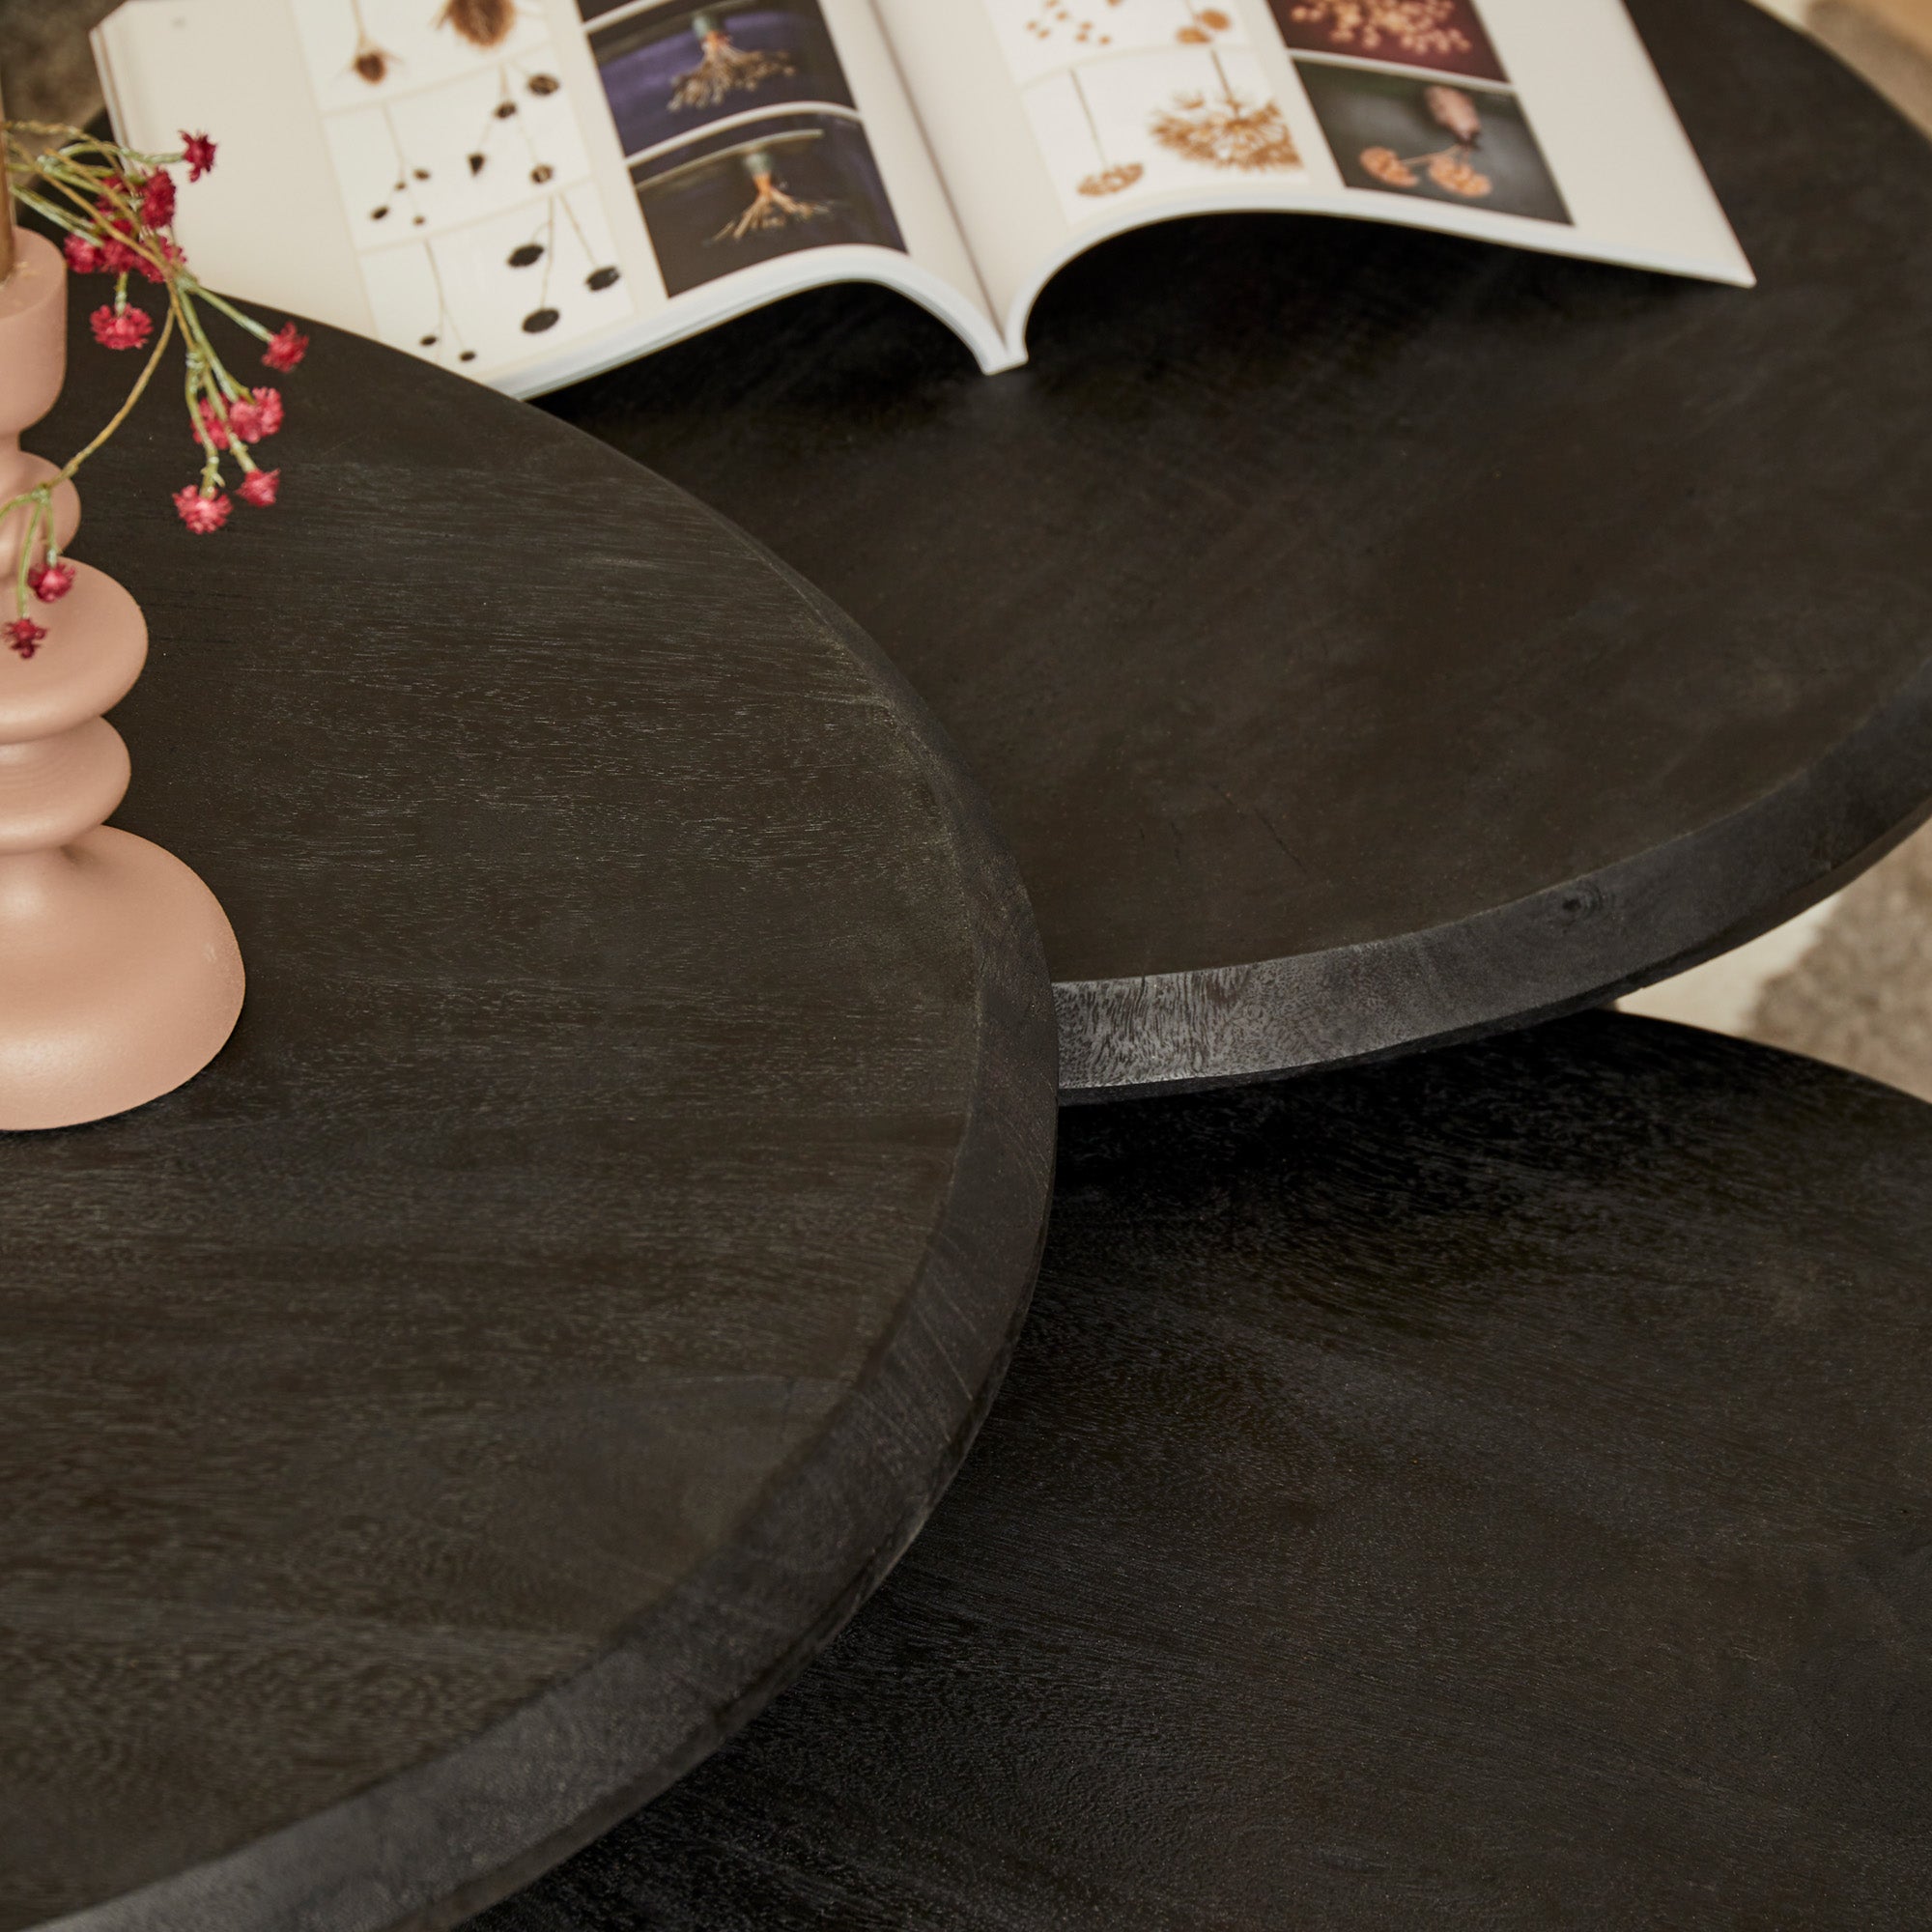 Coffee table Natural | round | Mango wood | 38(h) x Ø70 cm cm